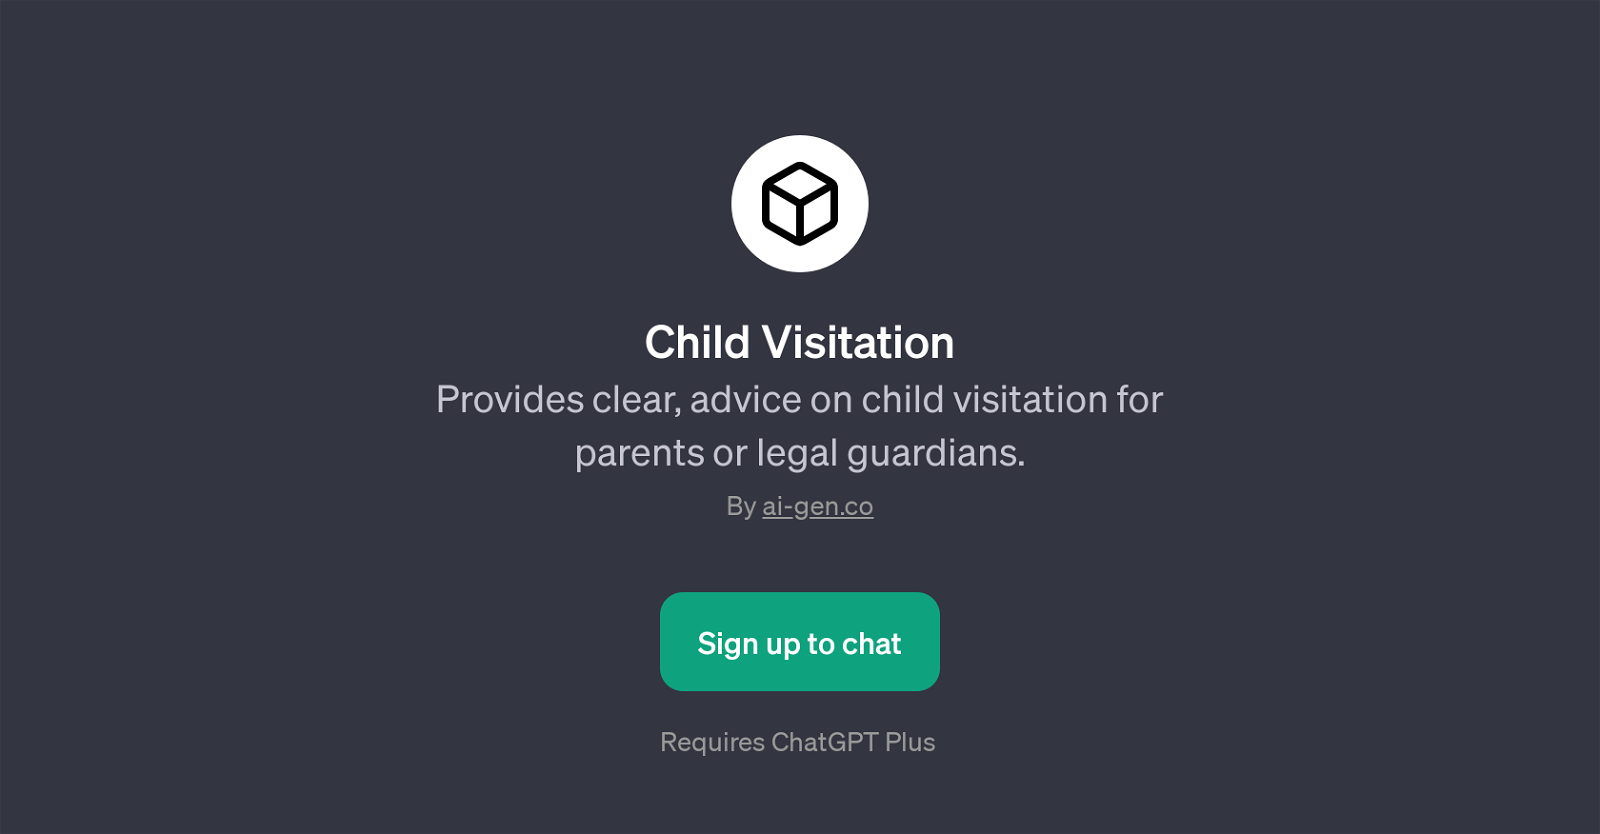 Child Visitation website